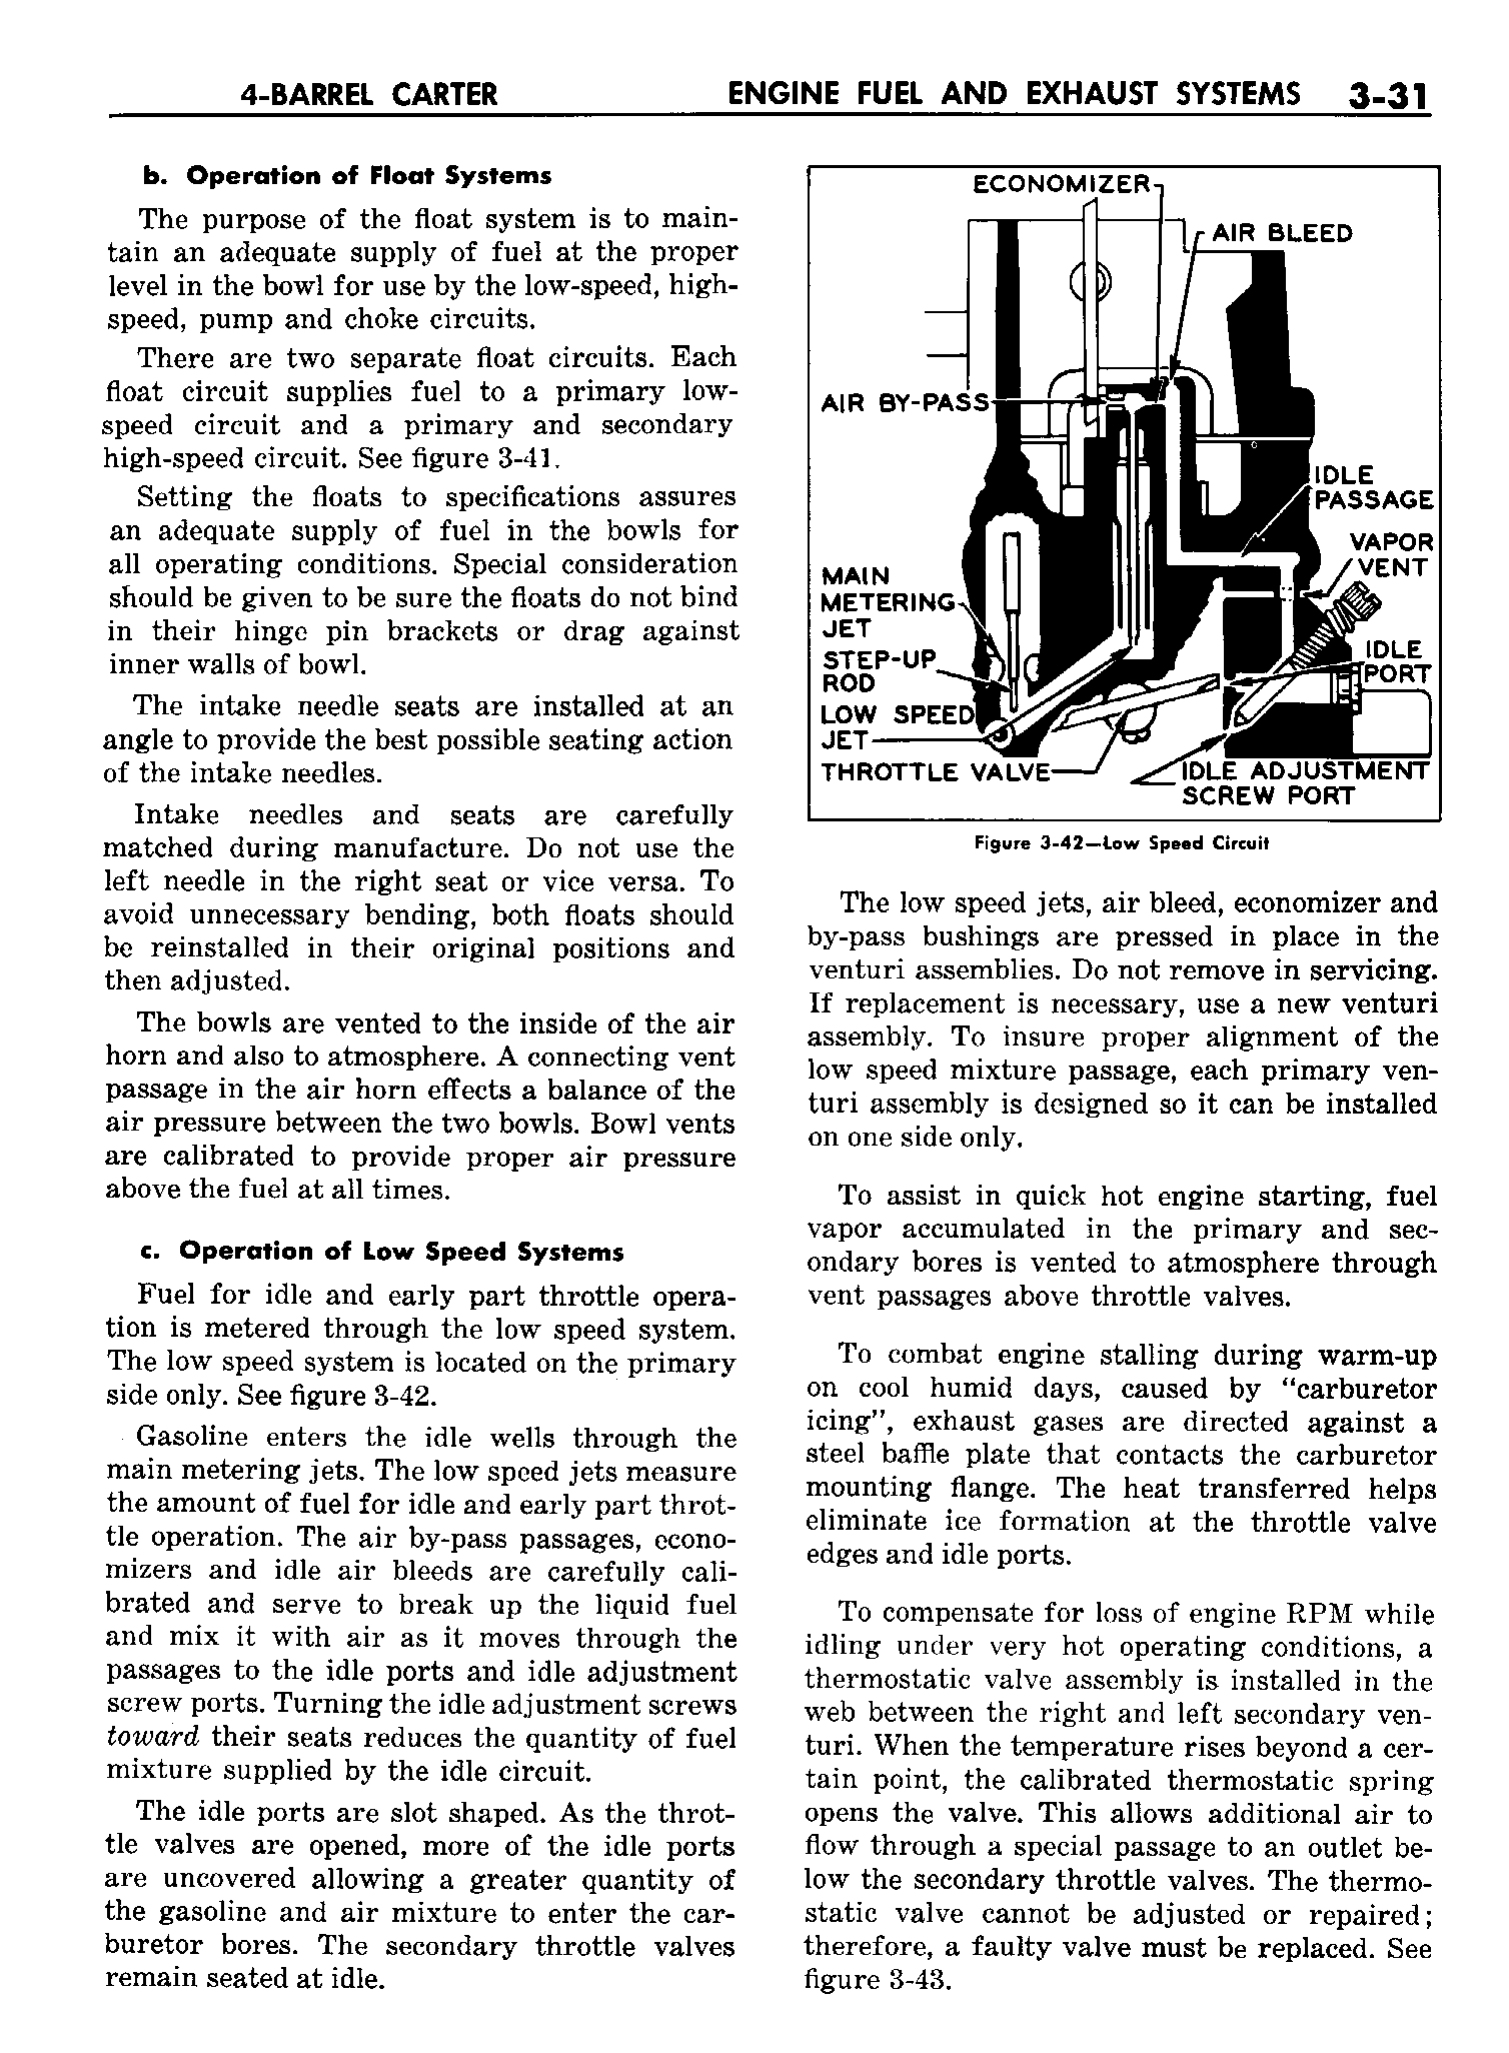 n_04 1958 Buick Shop Manual - Engine Fuel & Exhaust_31.jpg